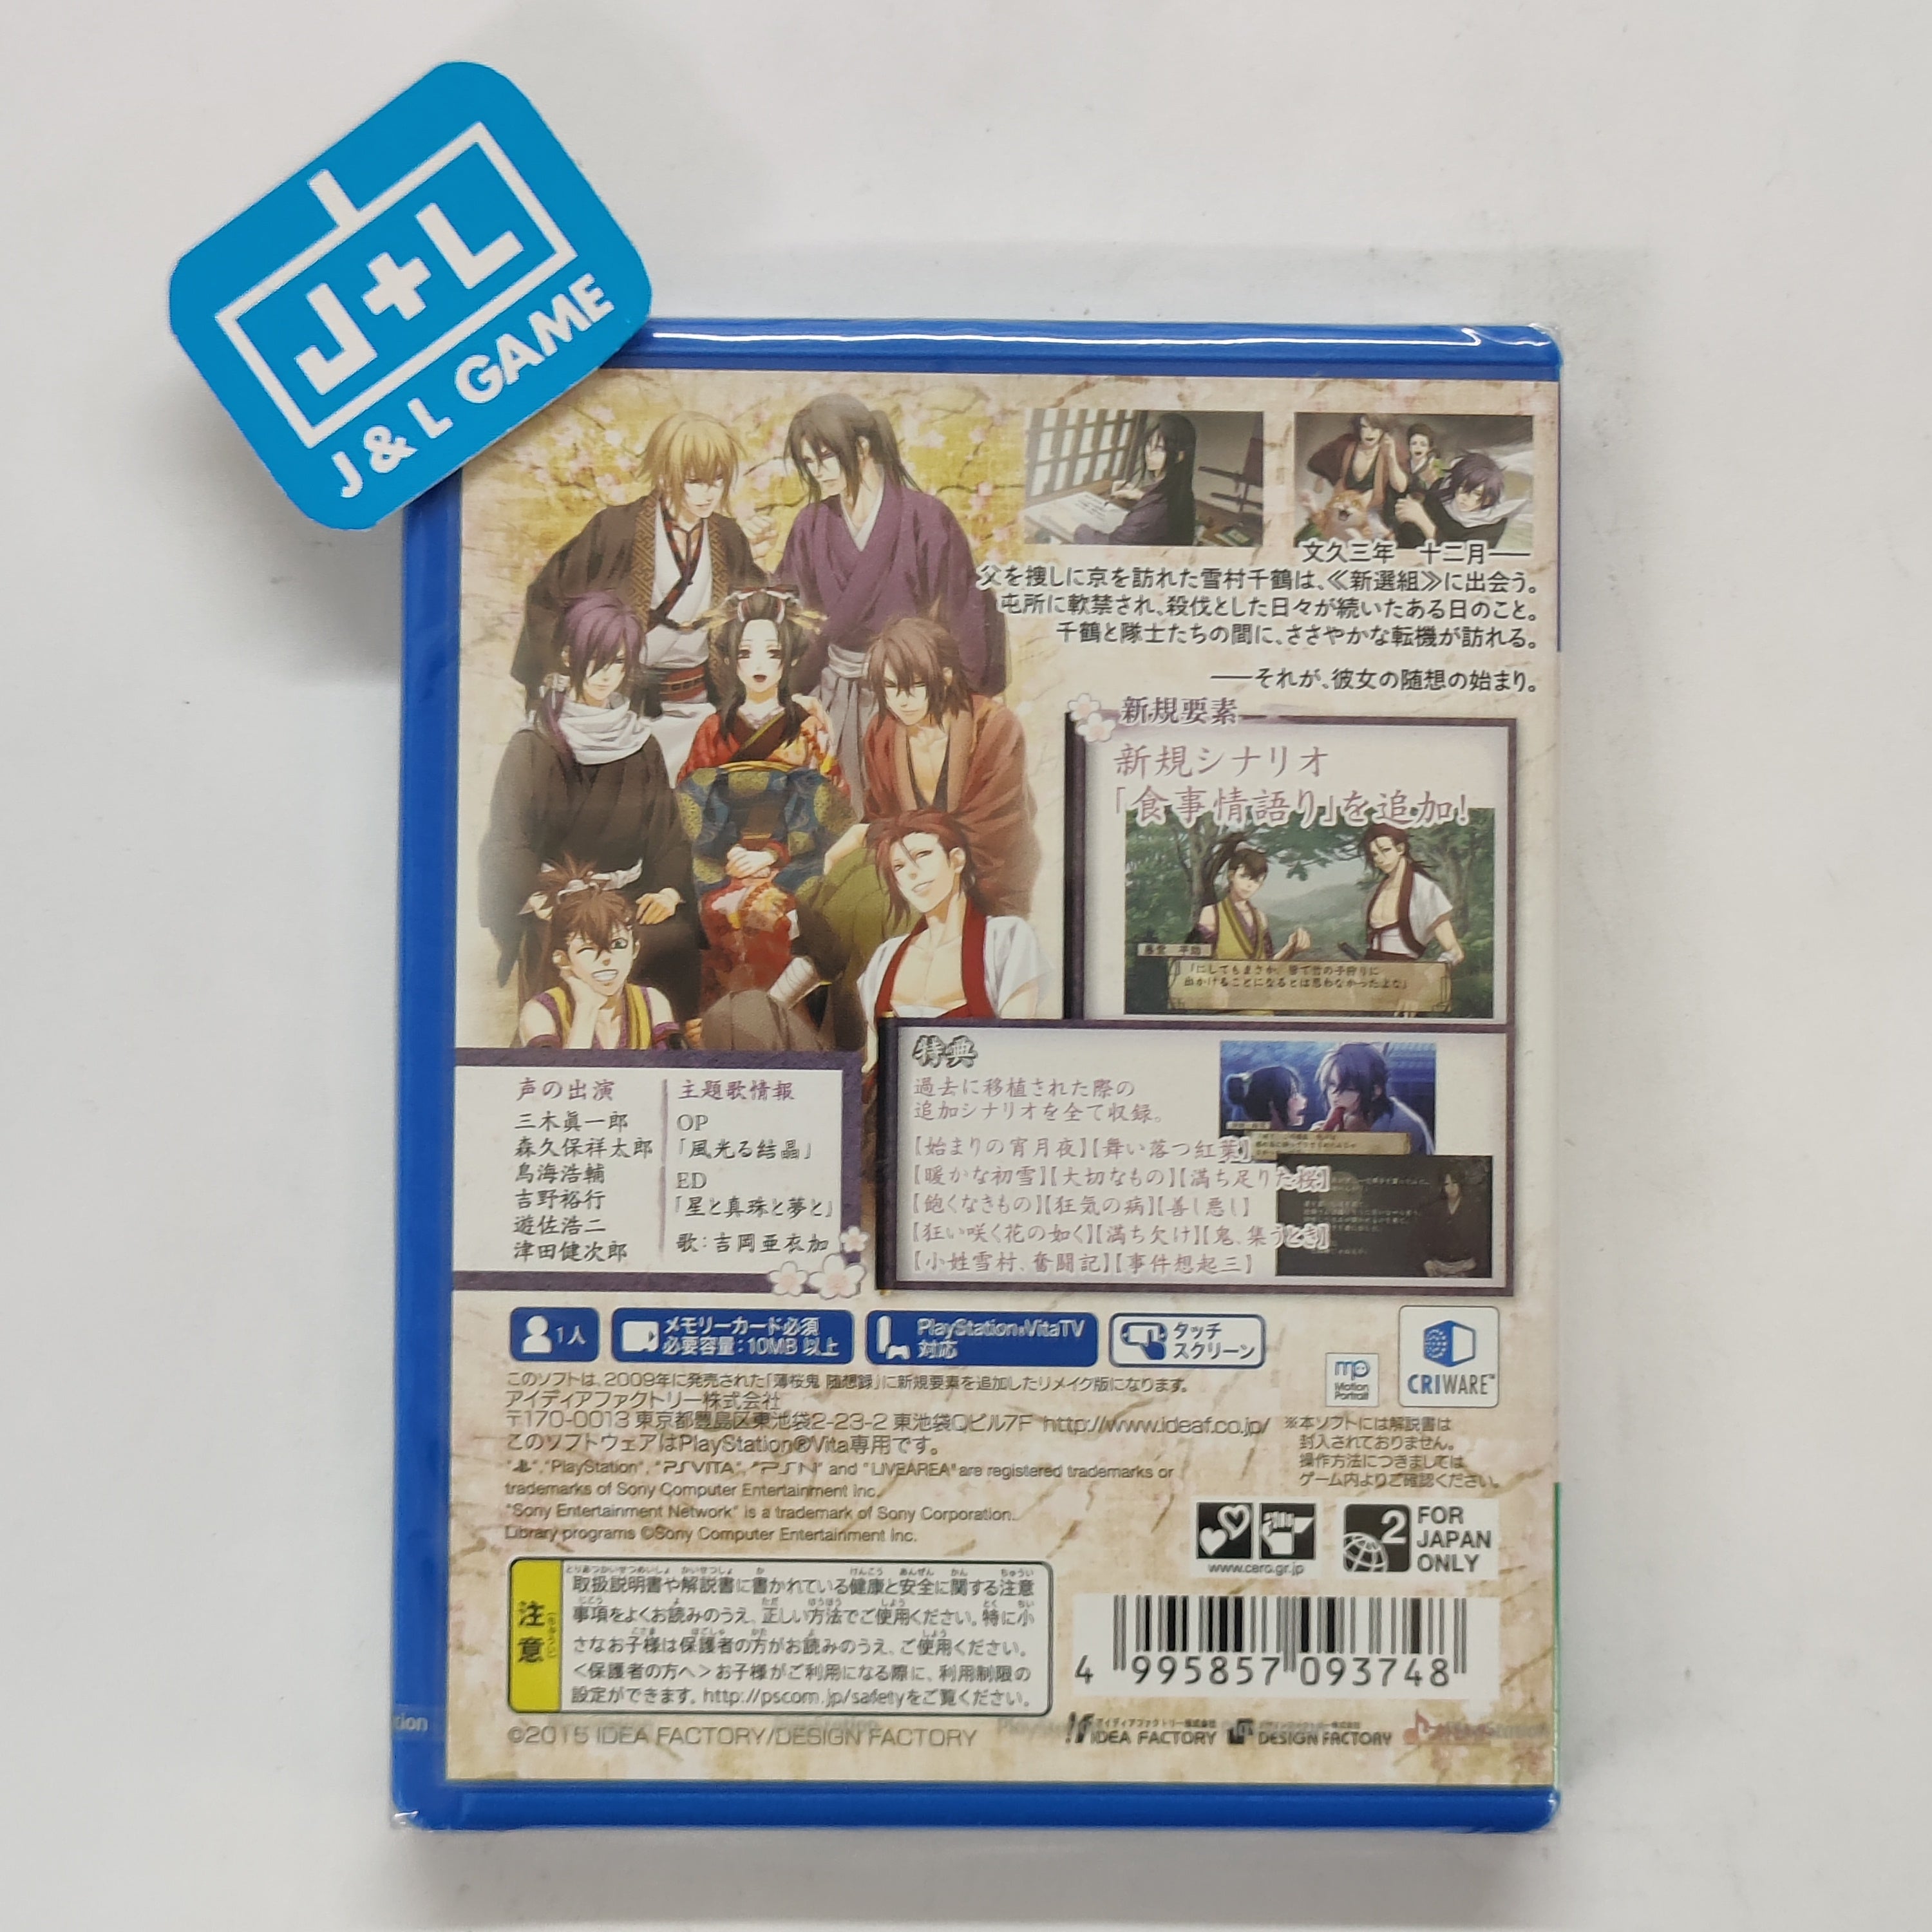 Hakuouki: Zuisouroku - Omokagebana - (PSV) PlayStation Vita (Japanese Import) Video Games Idea Factory   